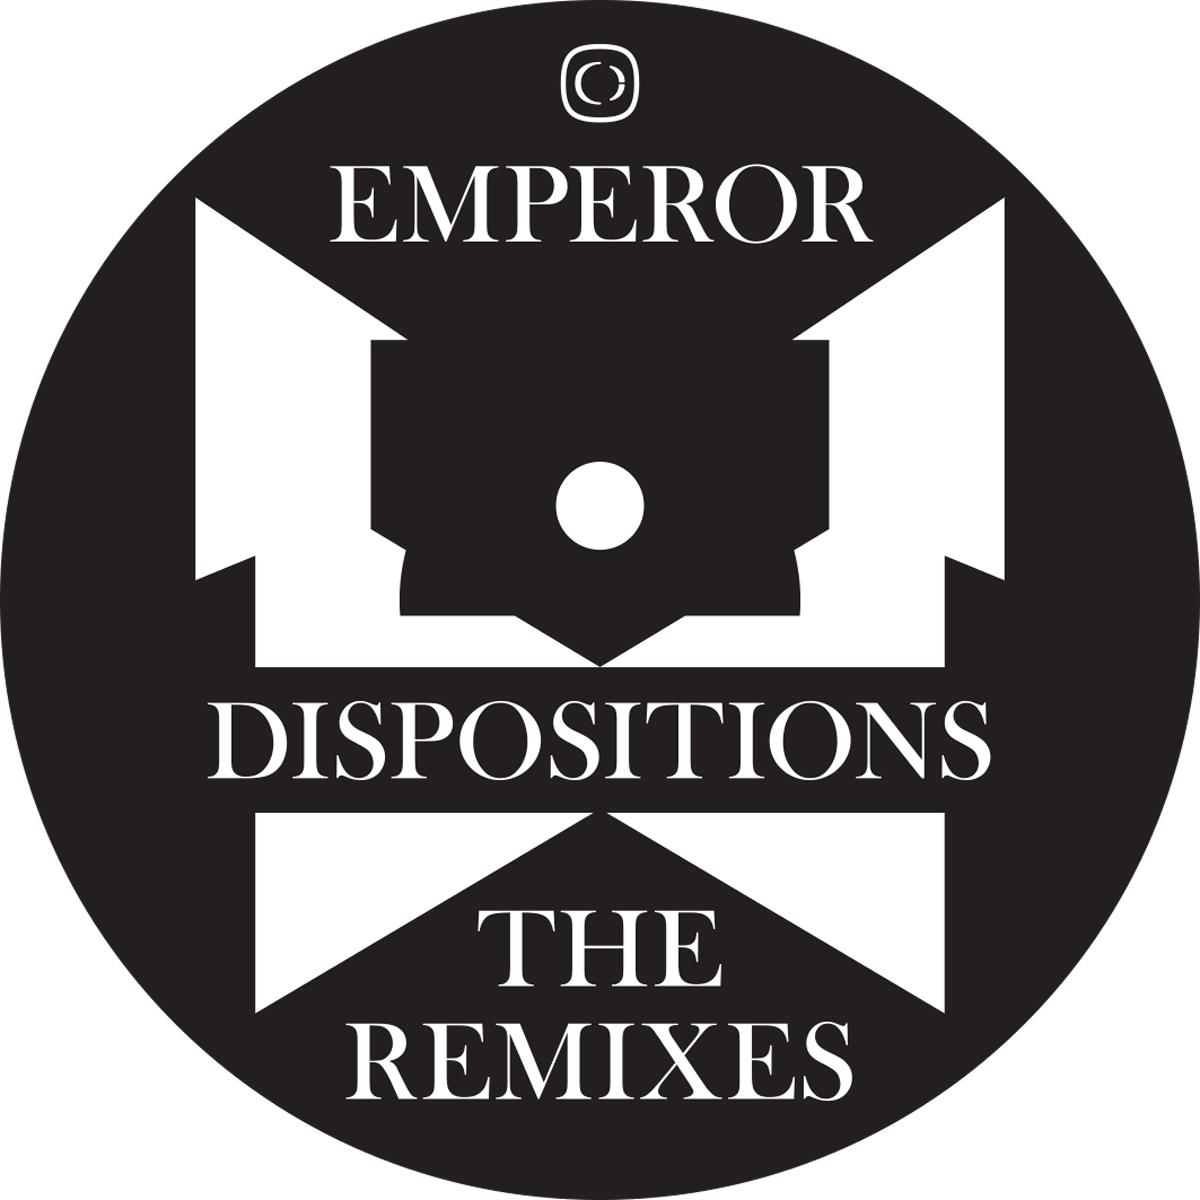 Emperor/DISPOSITIONS: THE REMIXES 12"